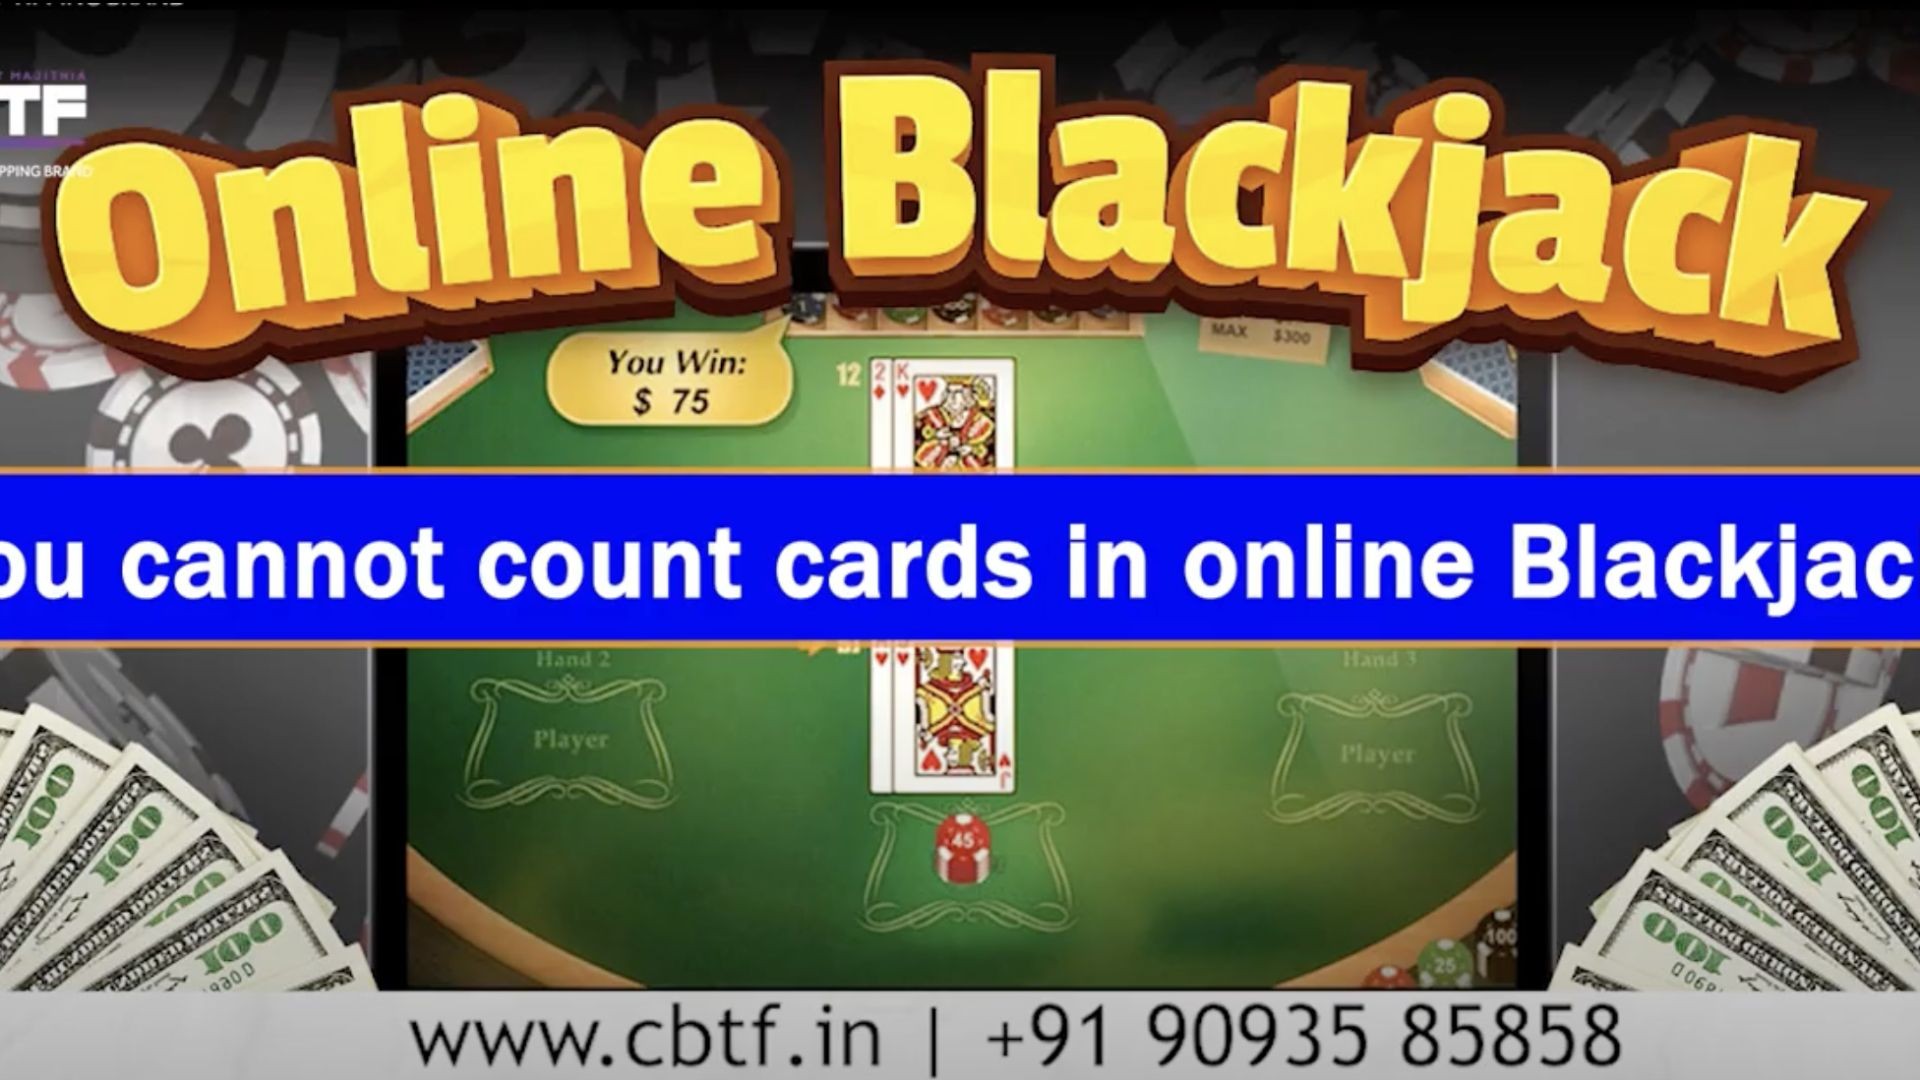 Online Blackjack - Playing Guide